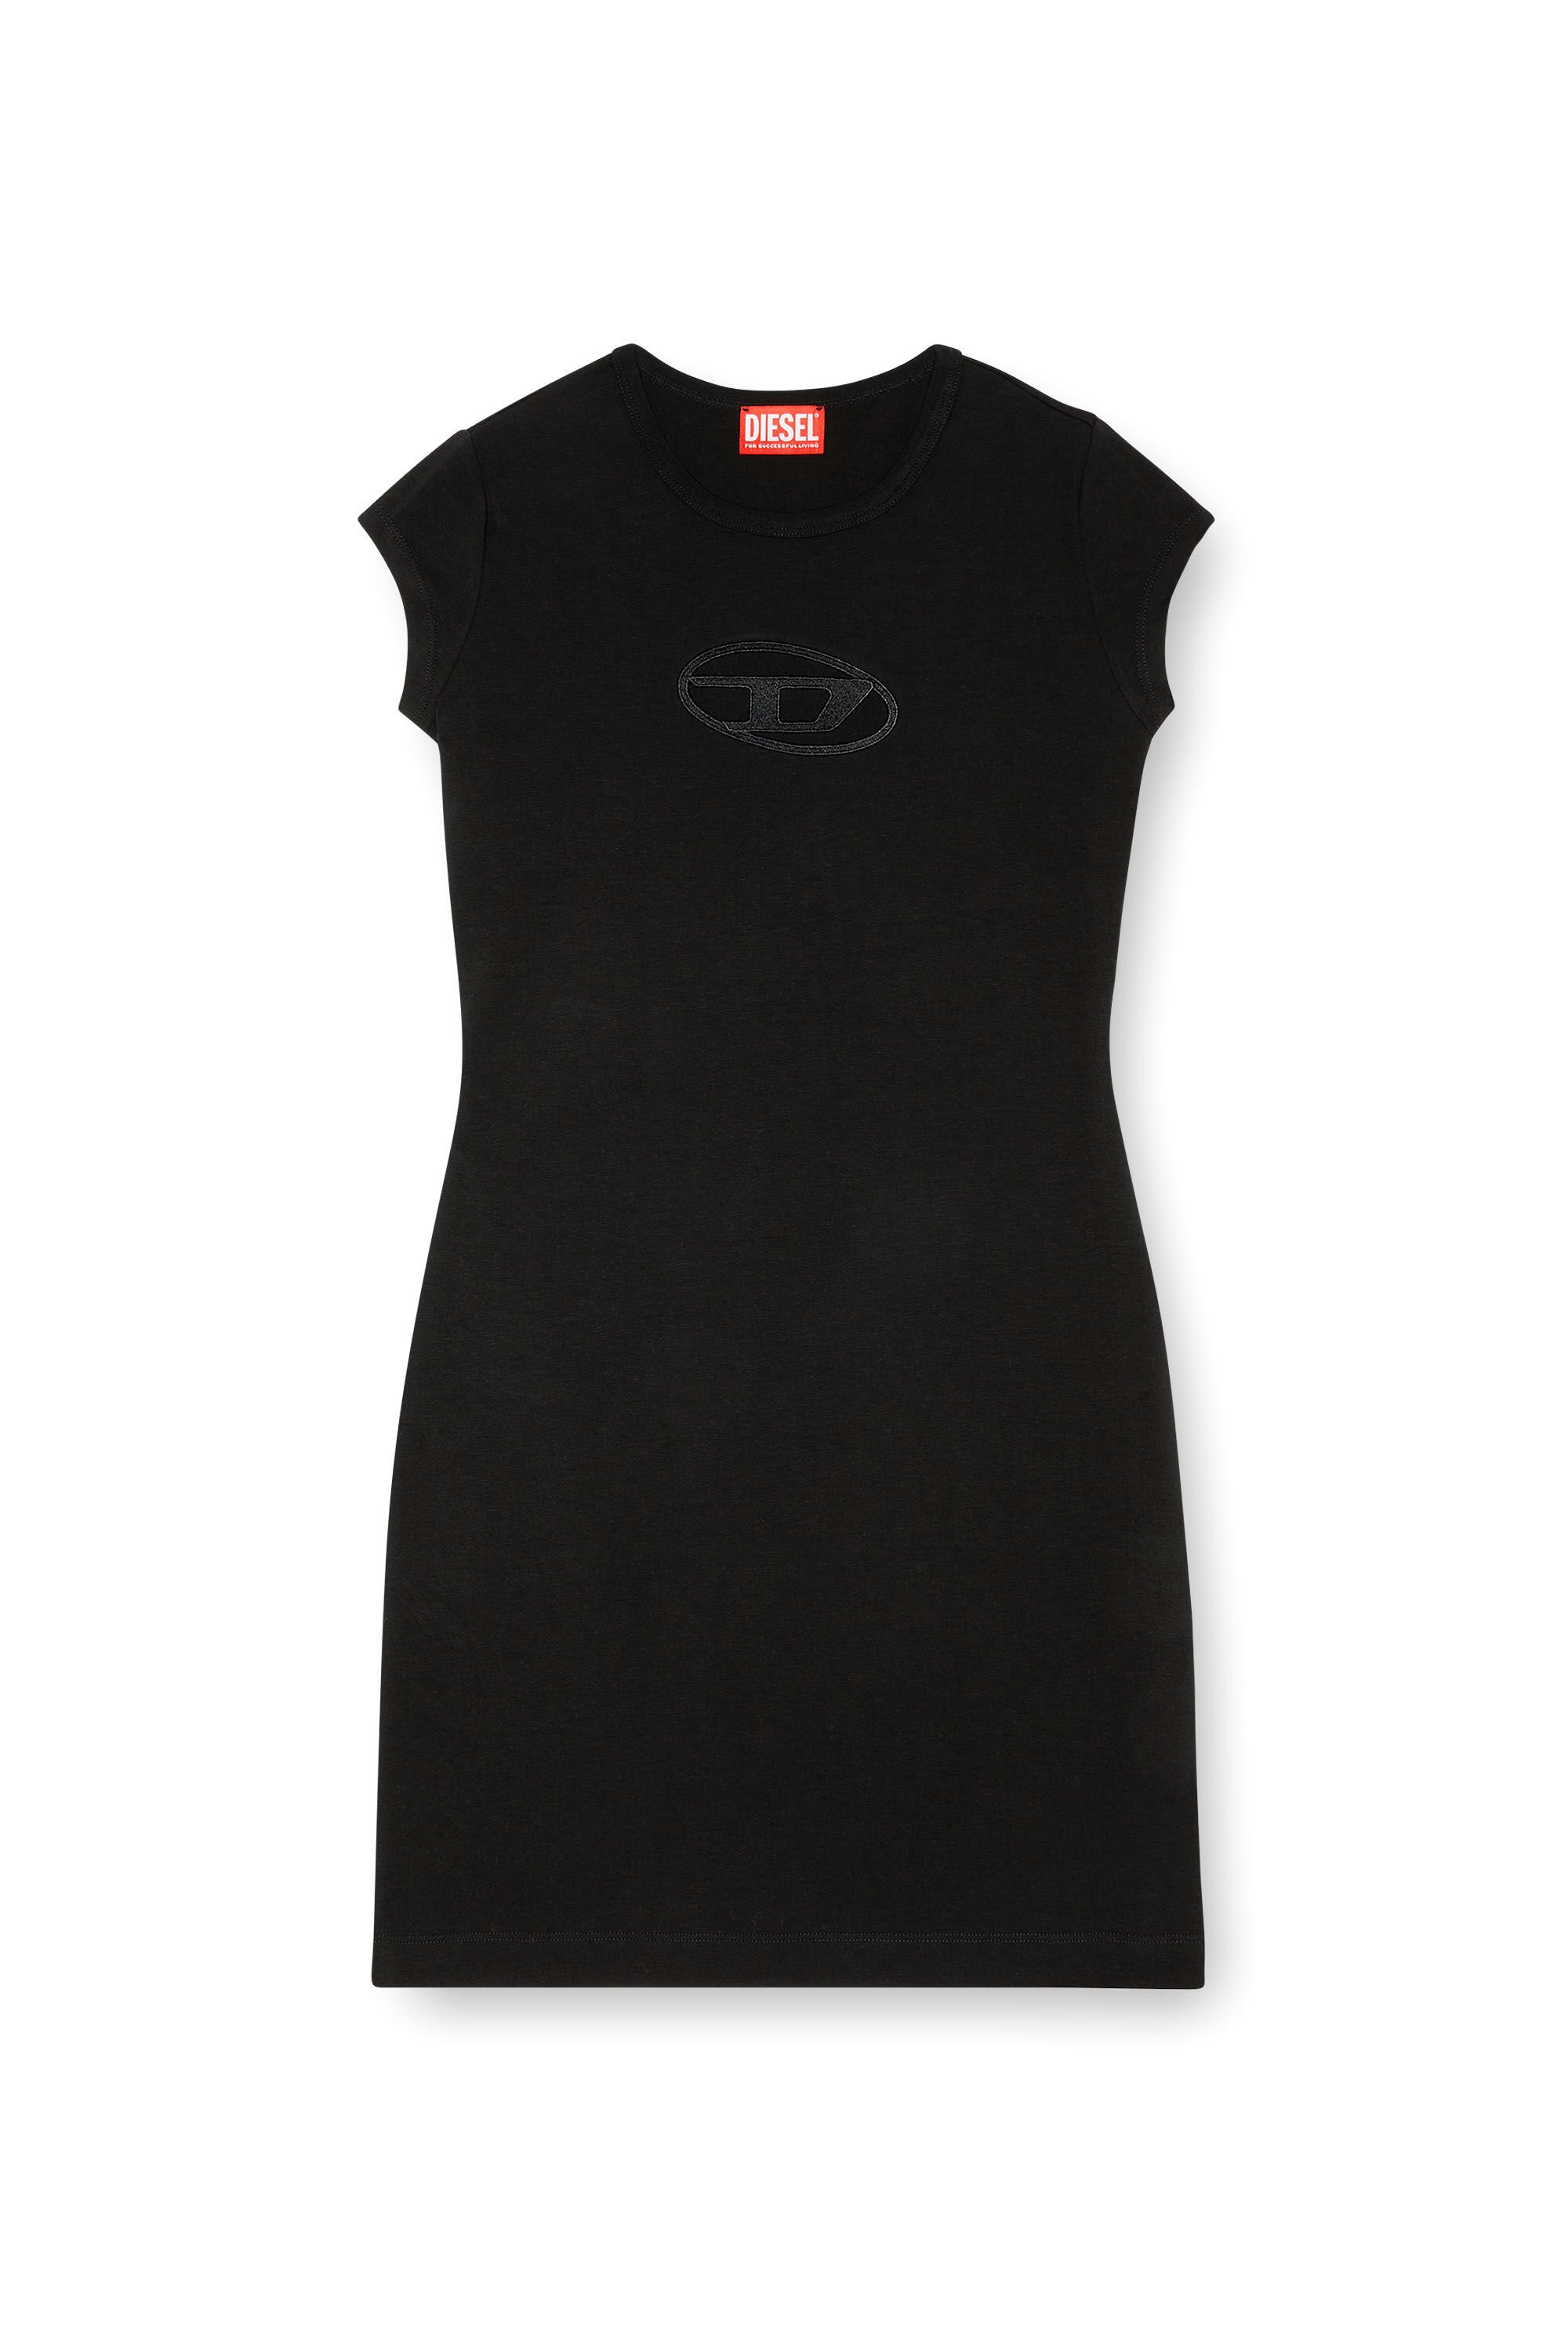 Diesel - D-ANGIEL, Female Short dress in Black - Image 2